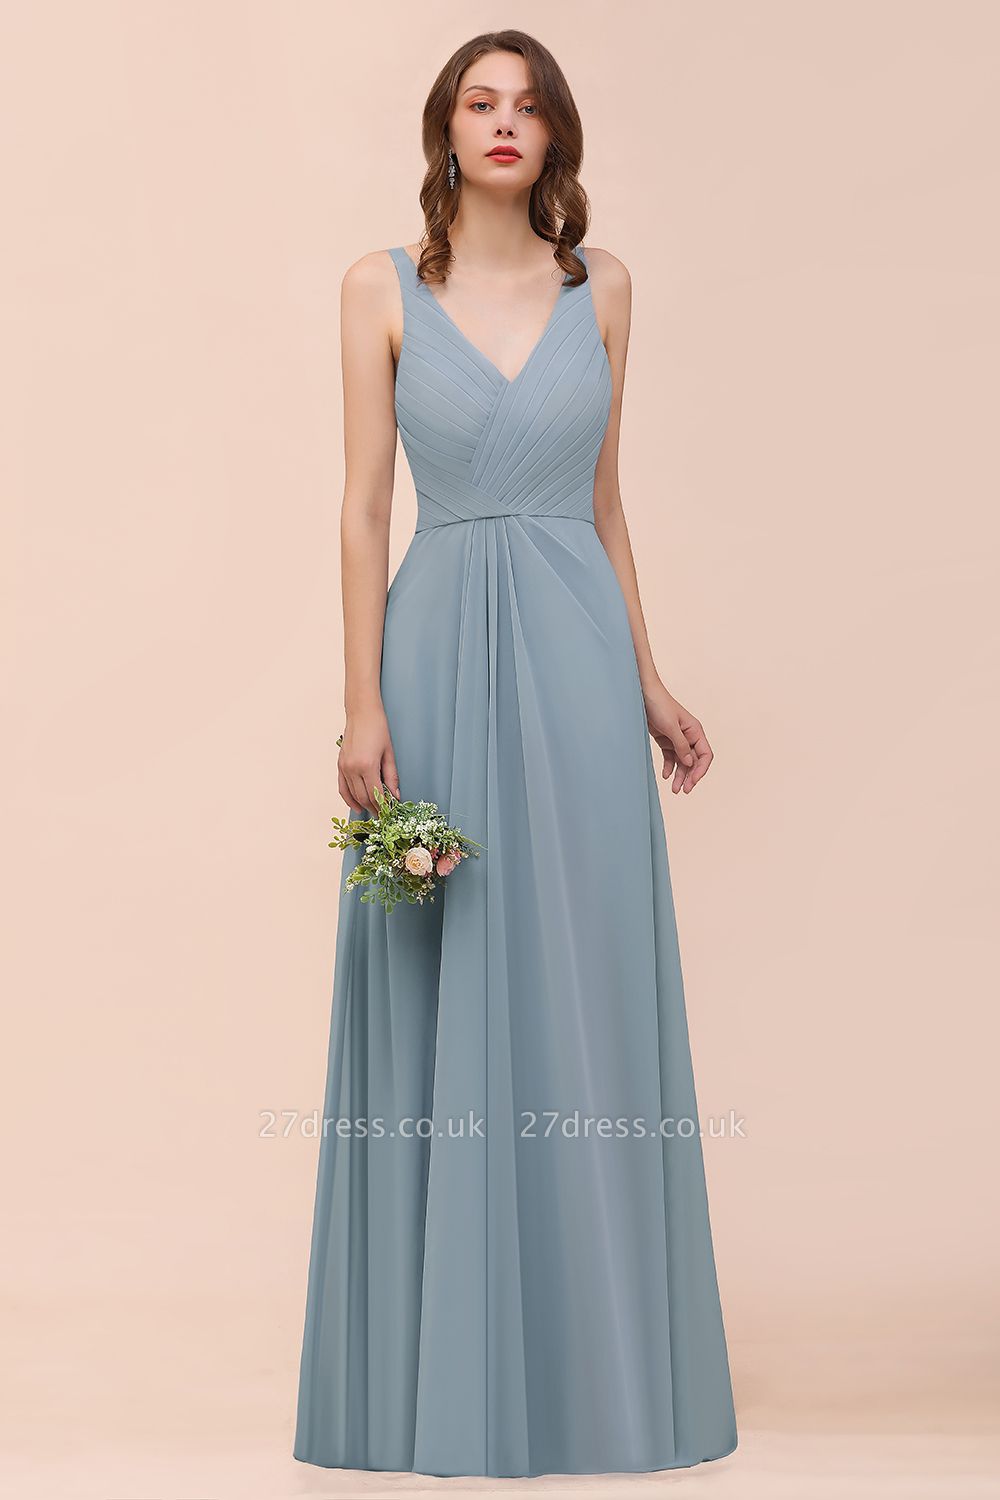 Elegant V-Neck Dusty Blue Chiffon Bridesmaid Dress Sleeveless Floor Length Wedding Guest Dress